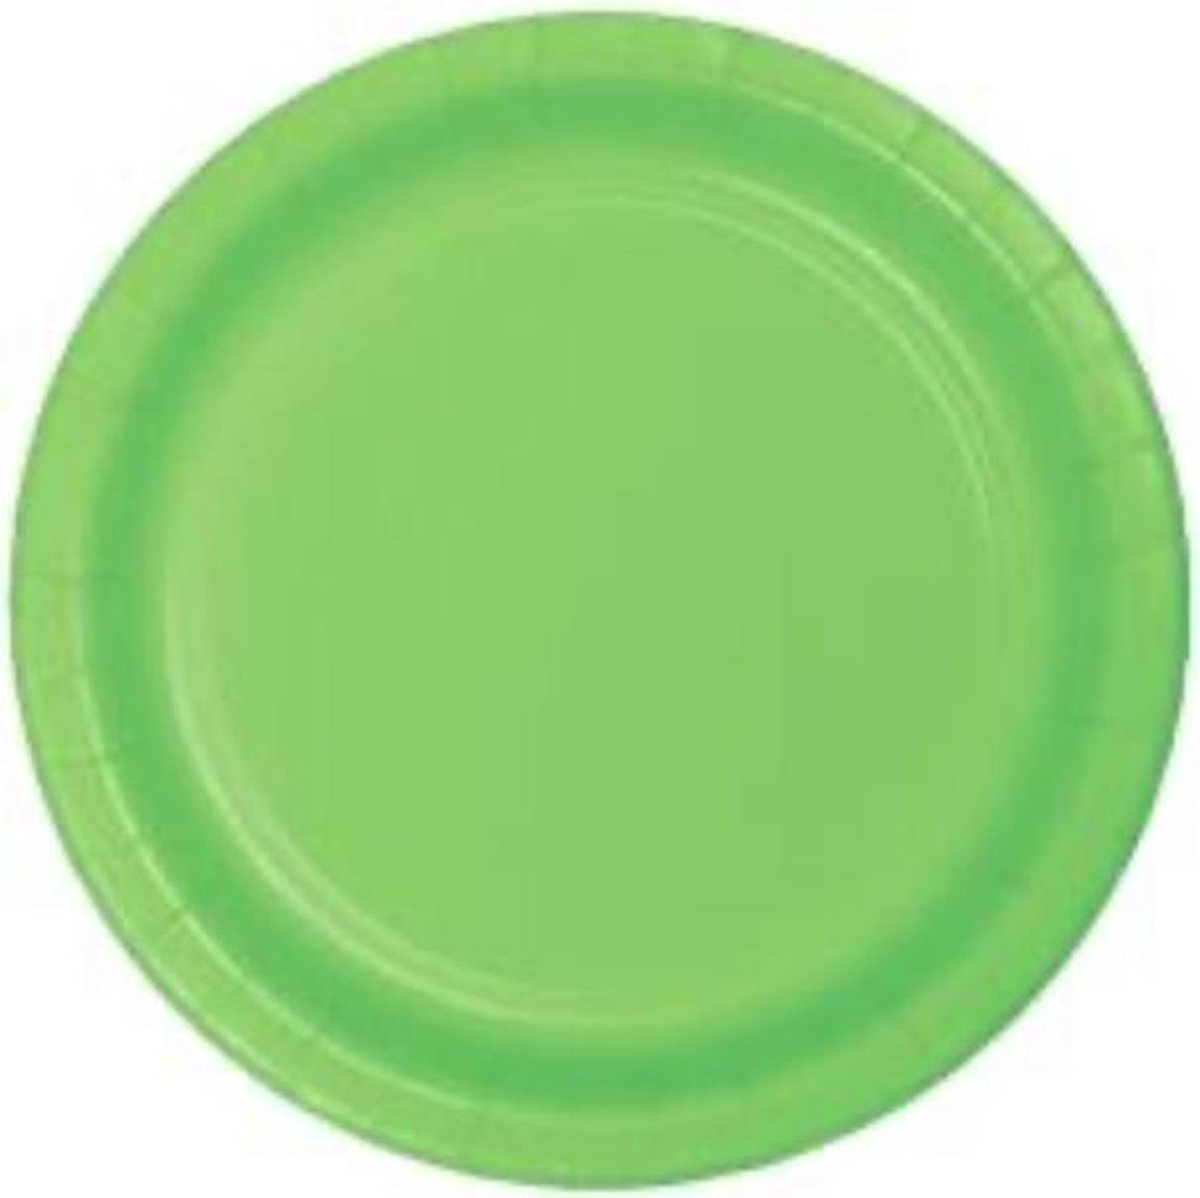 Kartonnen Bordjes groen 23cm 20st - Wegwerp borden - Feest/verjaardag/BBQ borden